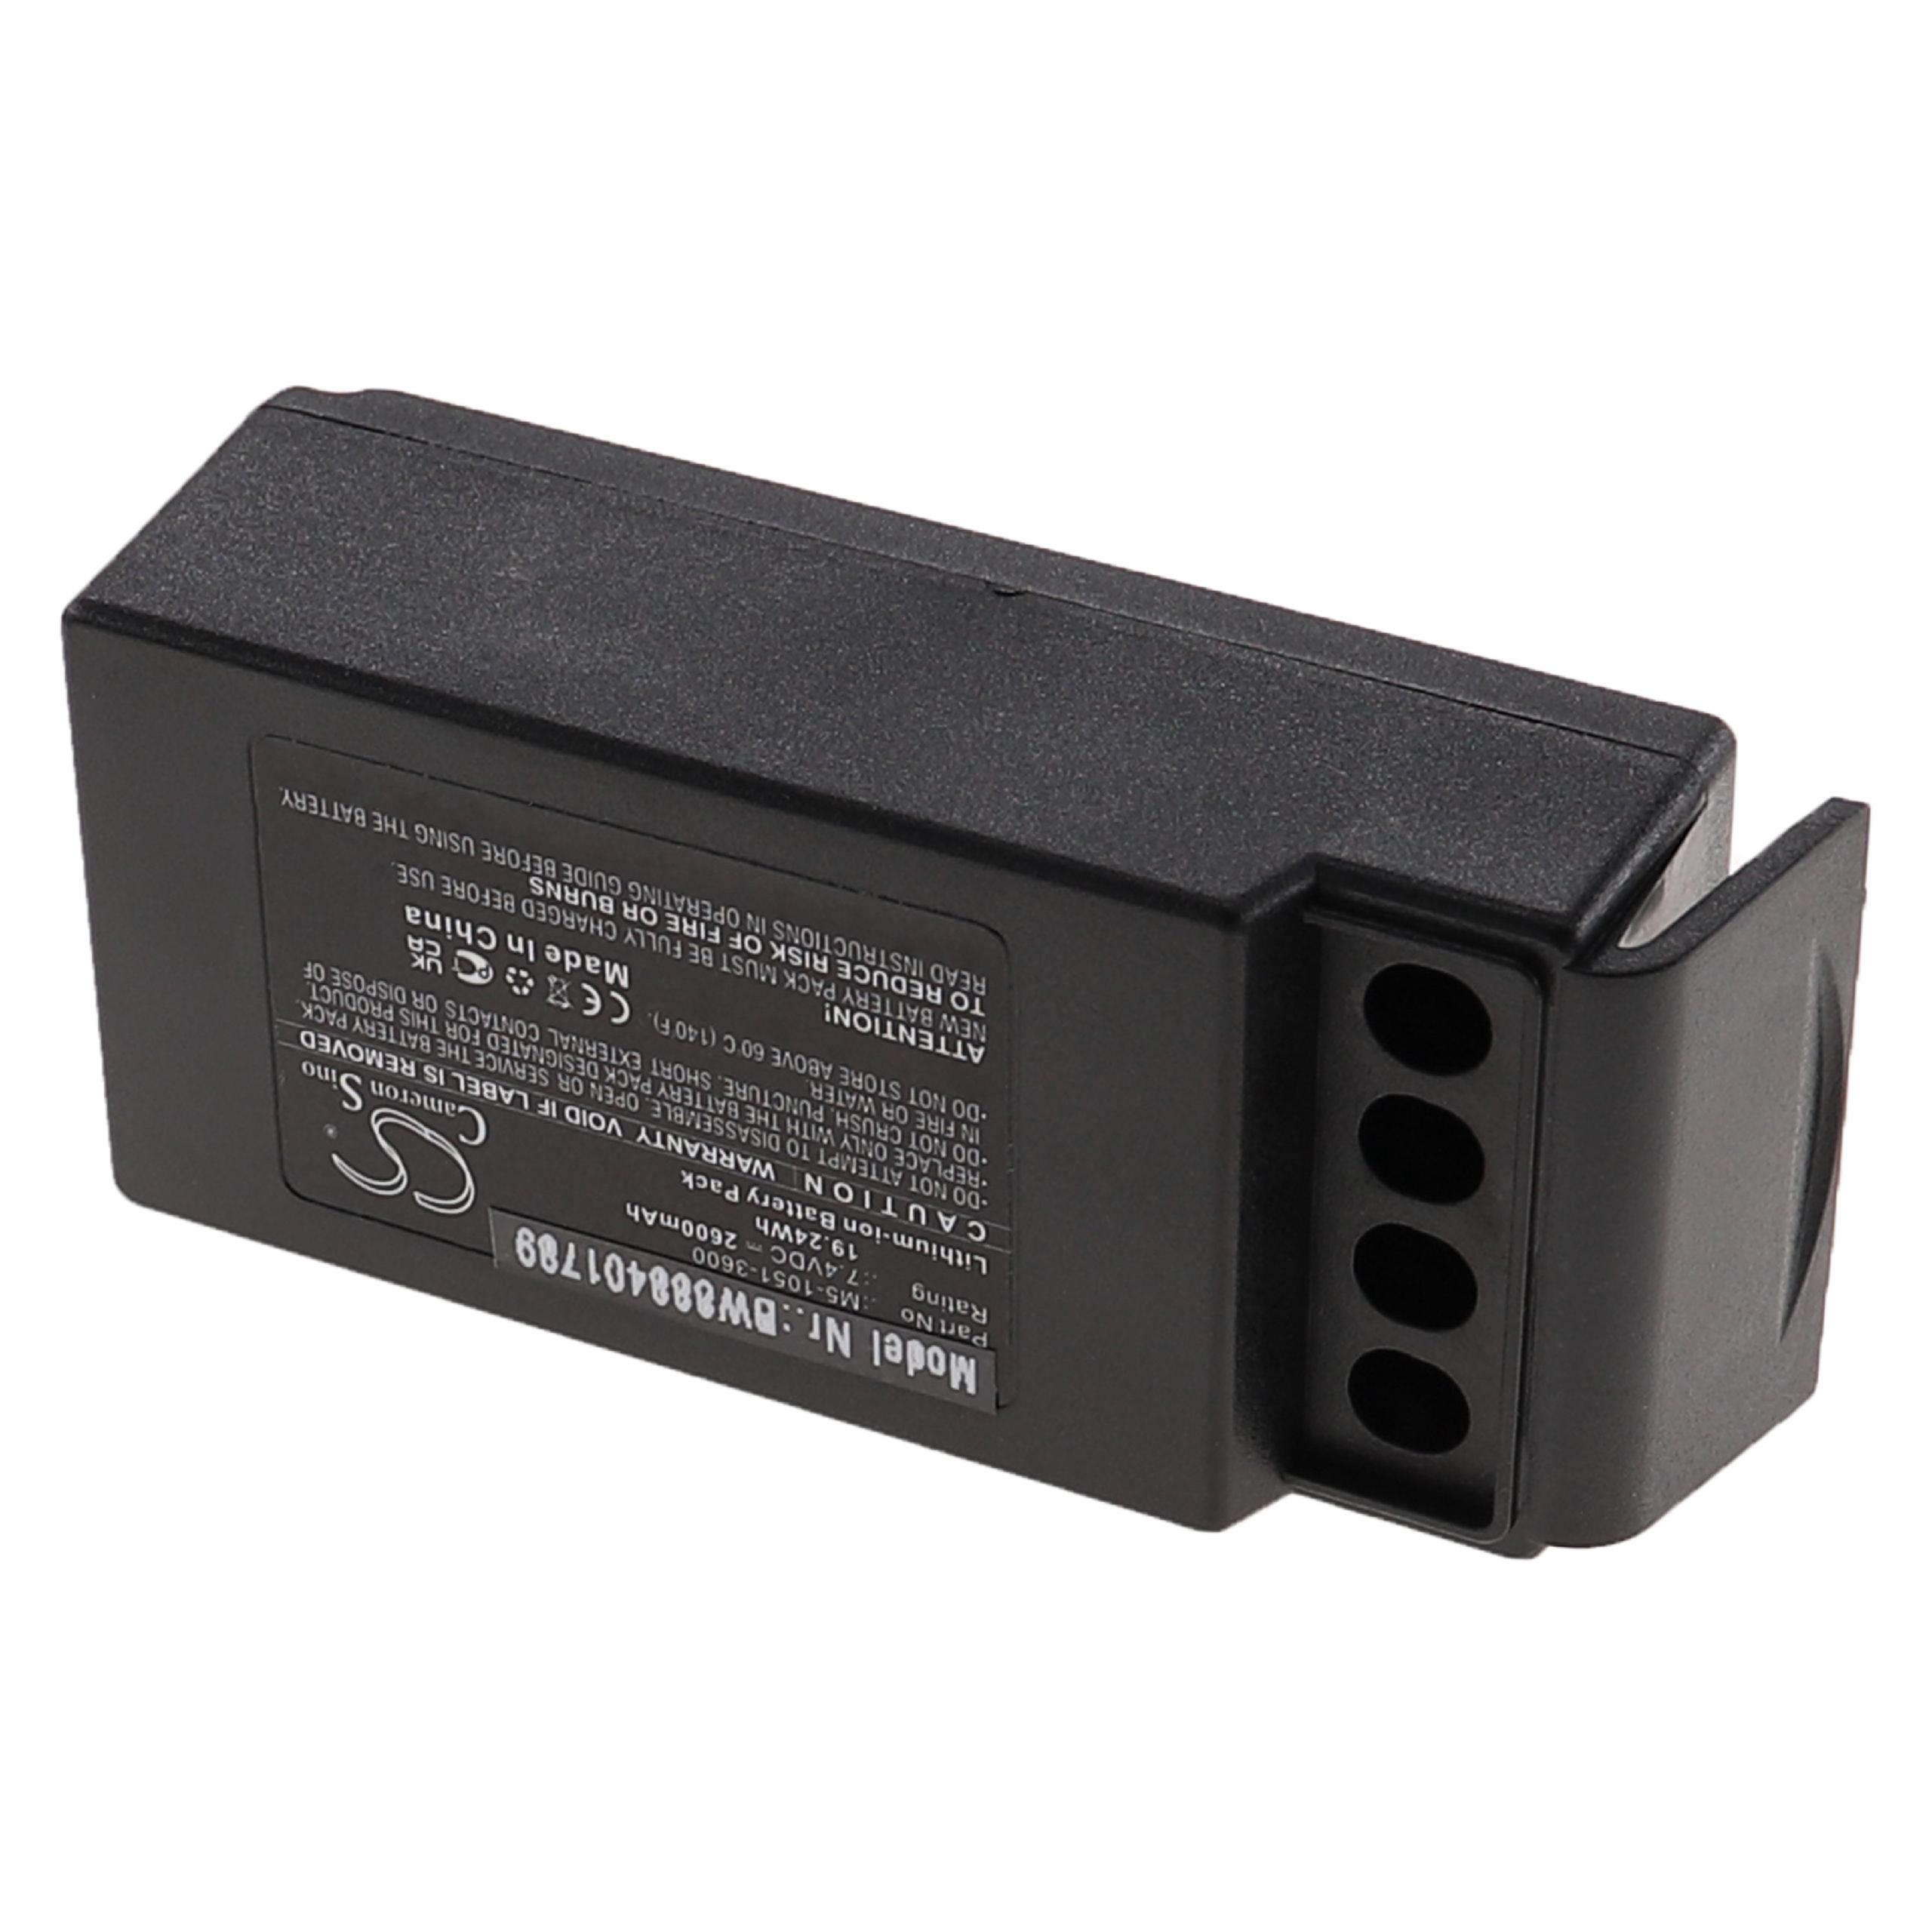 Batteria per radiocomando industriale sostituisce Cavotec M5-1051-3600 Cavotec - 2600mAh 7,4V Li-Ion